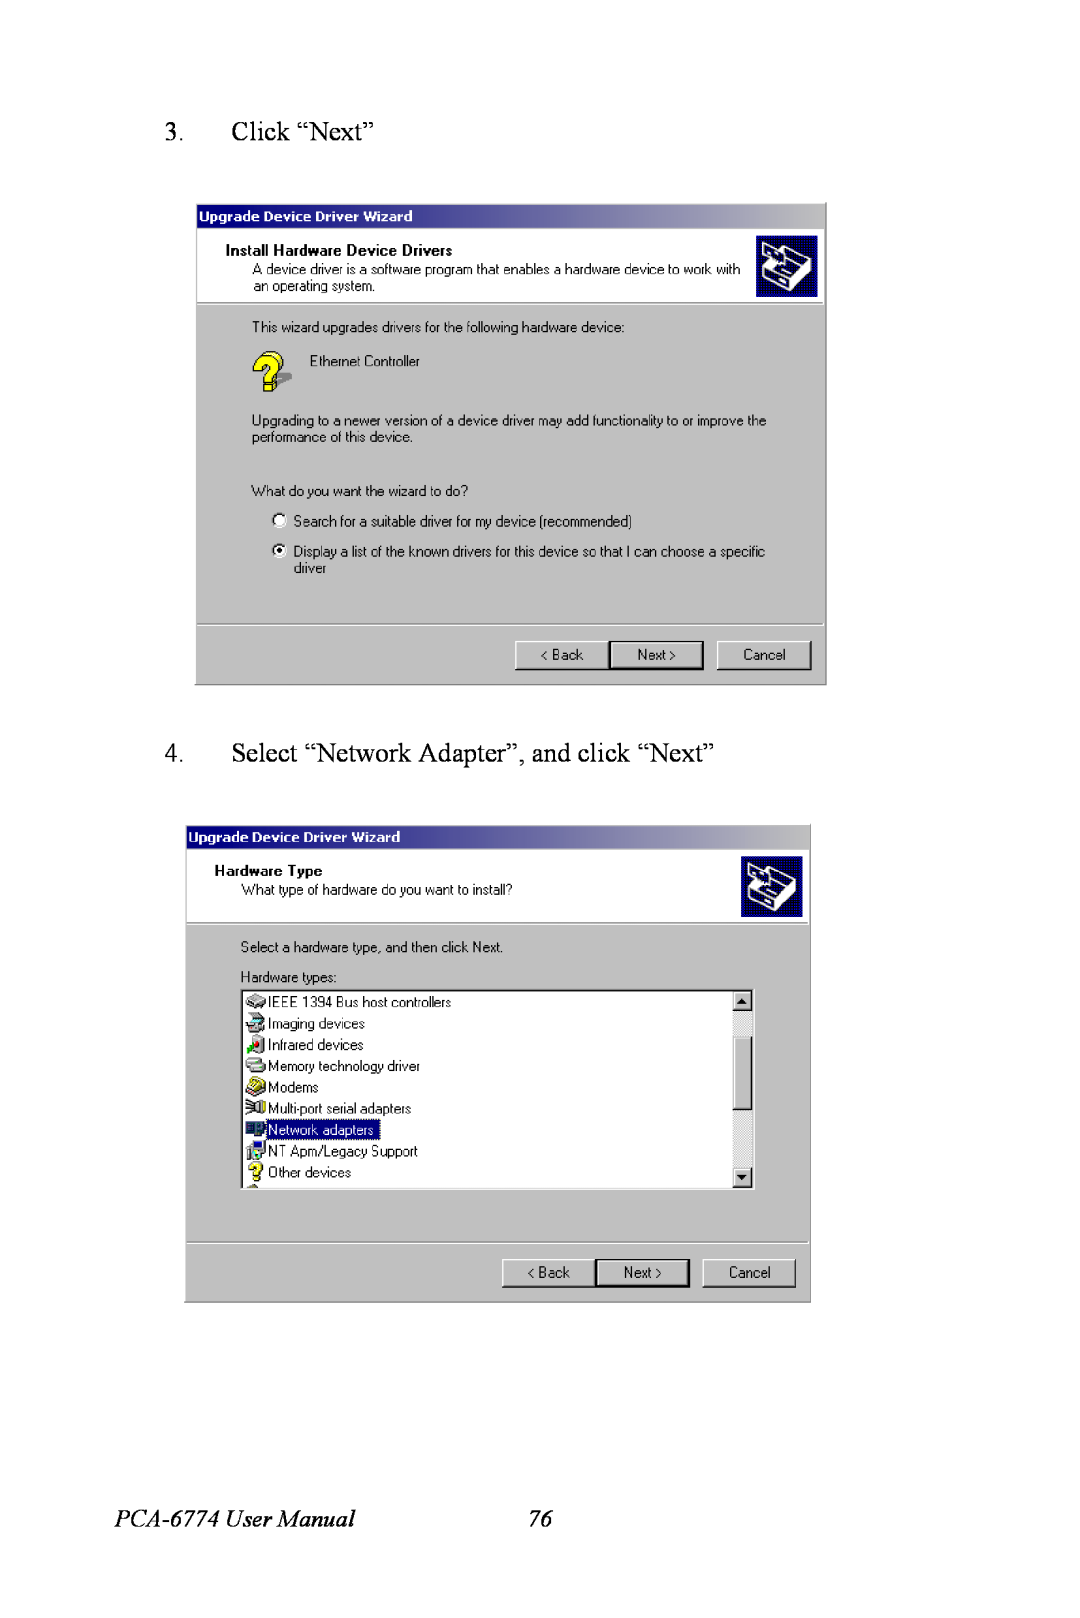 Advantech user manual Click “Next” 4. Select “Network Adapter”, and click “Next”, PCA-6774 User Manual 